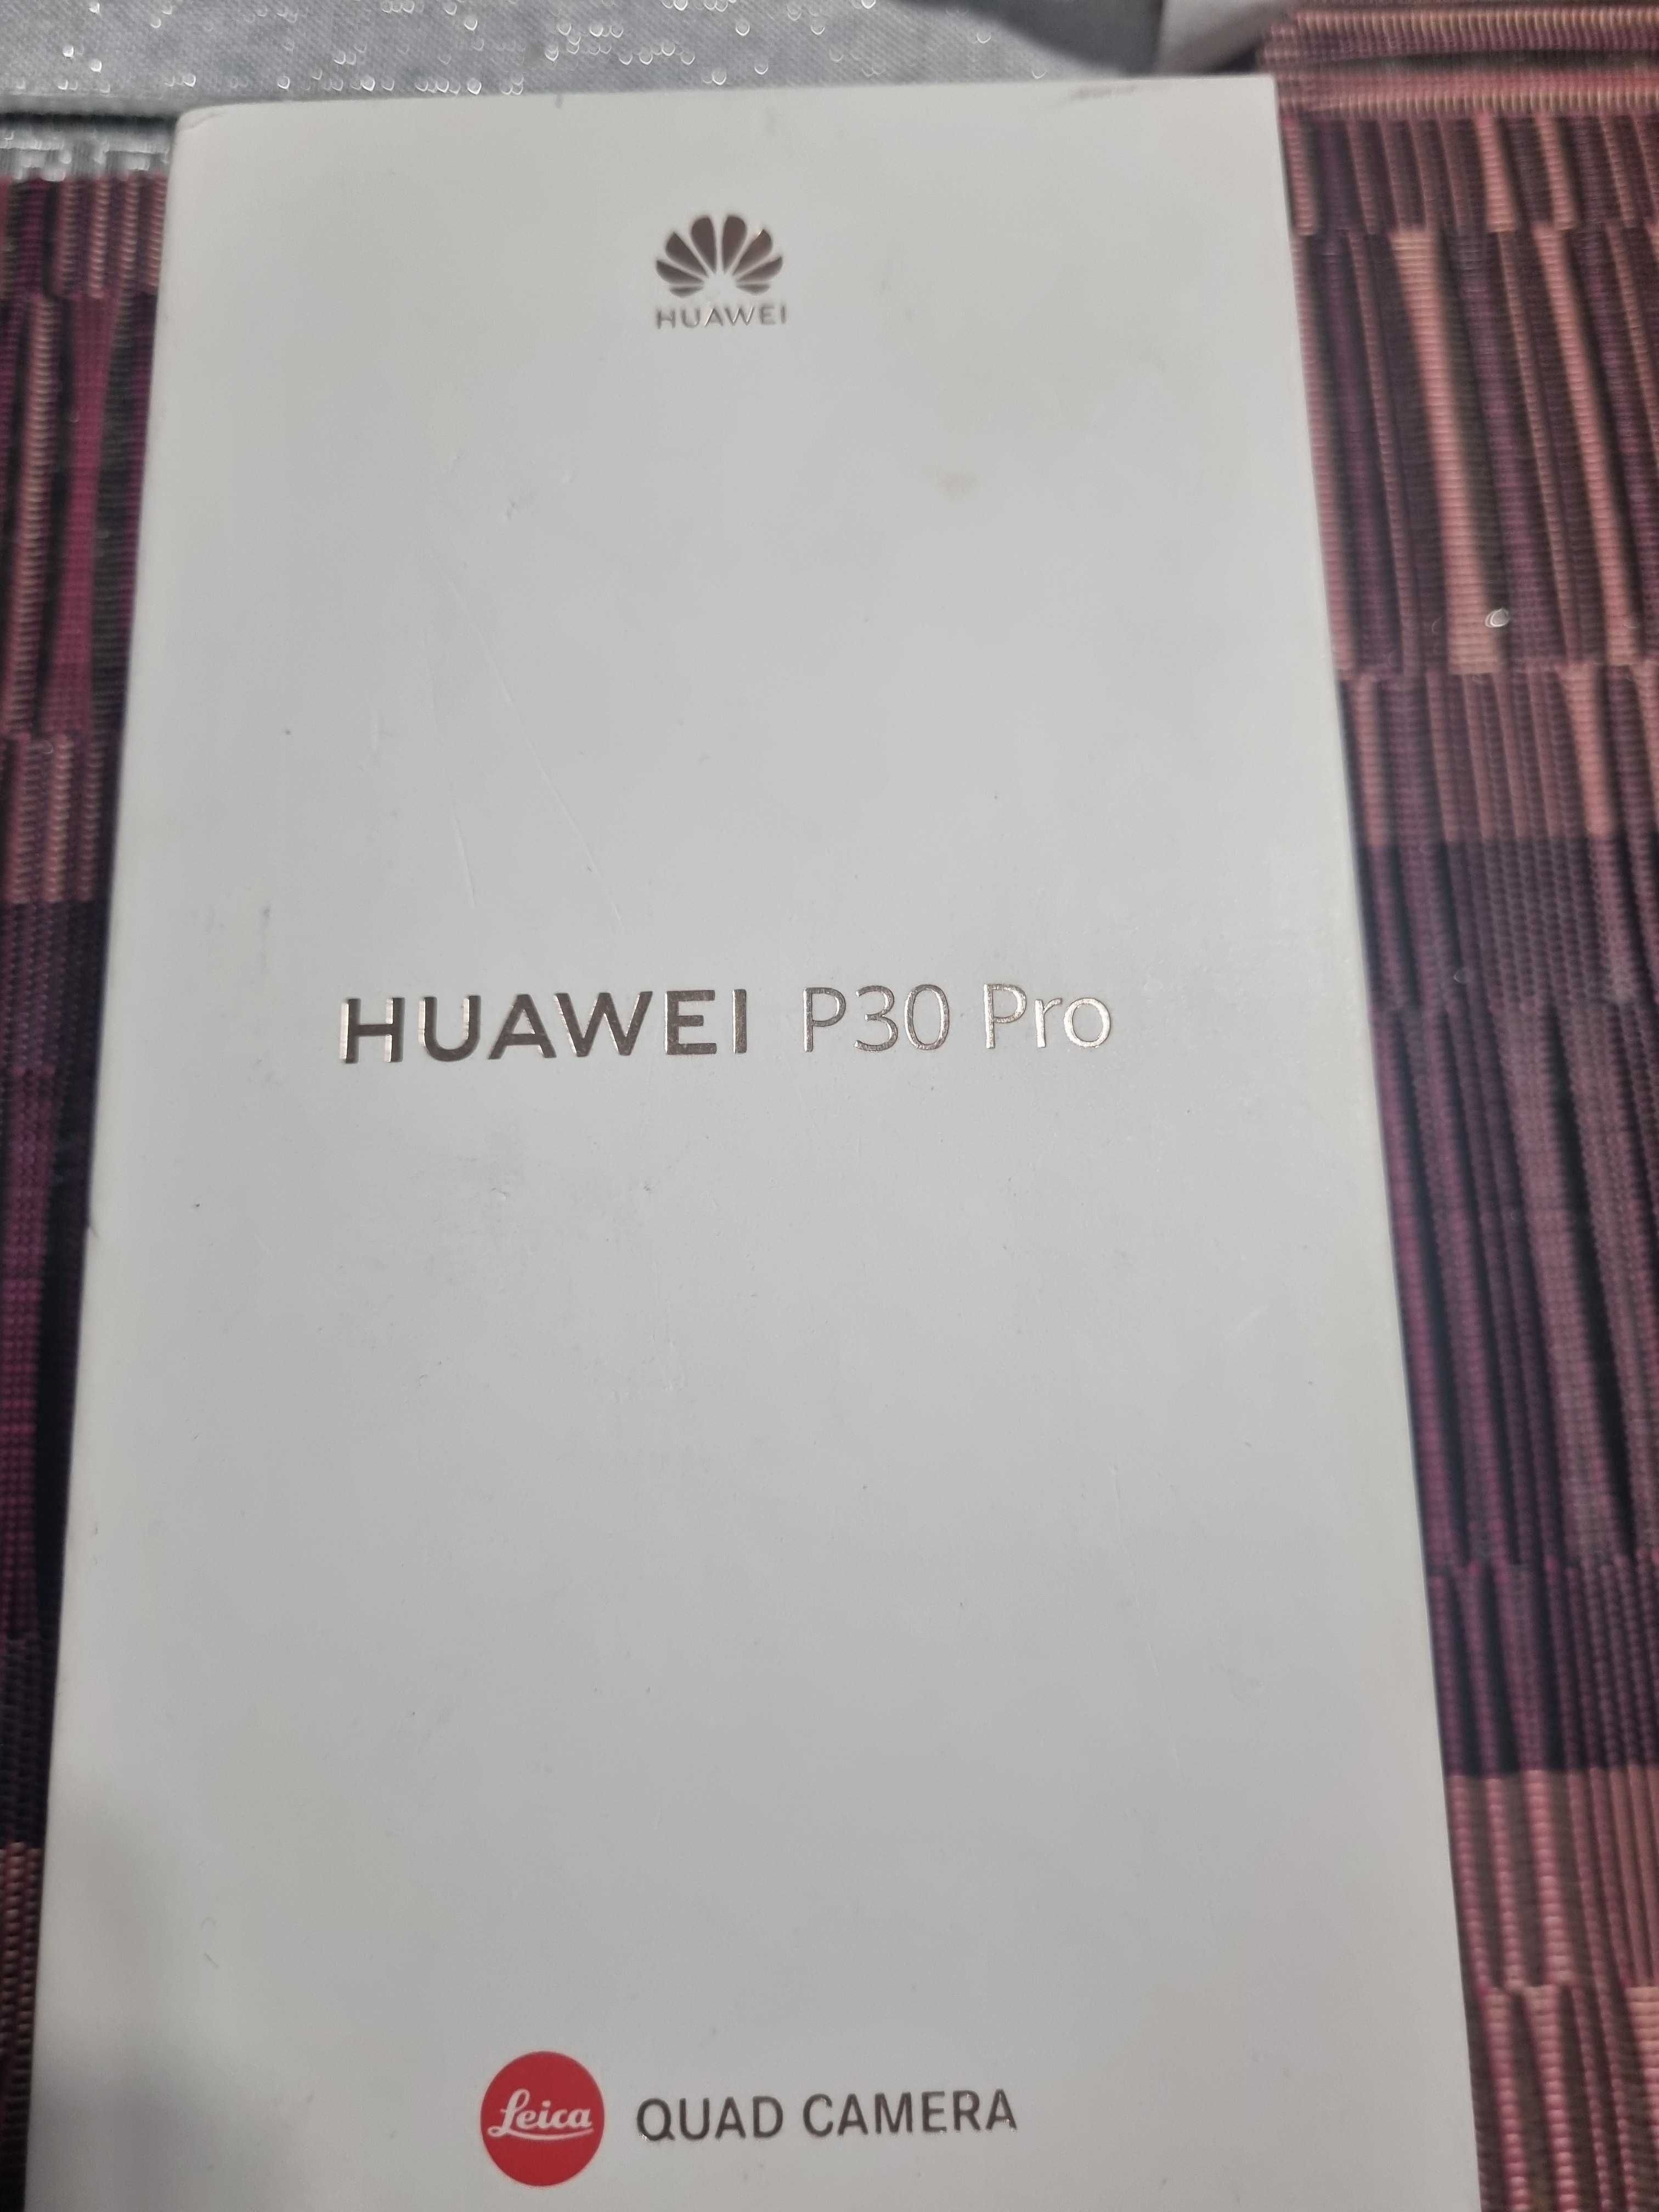 Huawei P30 Pro 6/128GB komplet, bez blokad Dual SIM